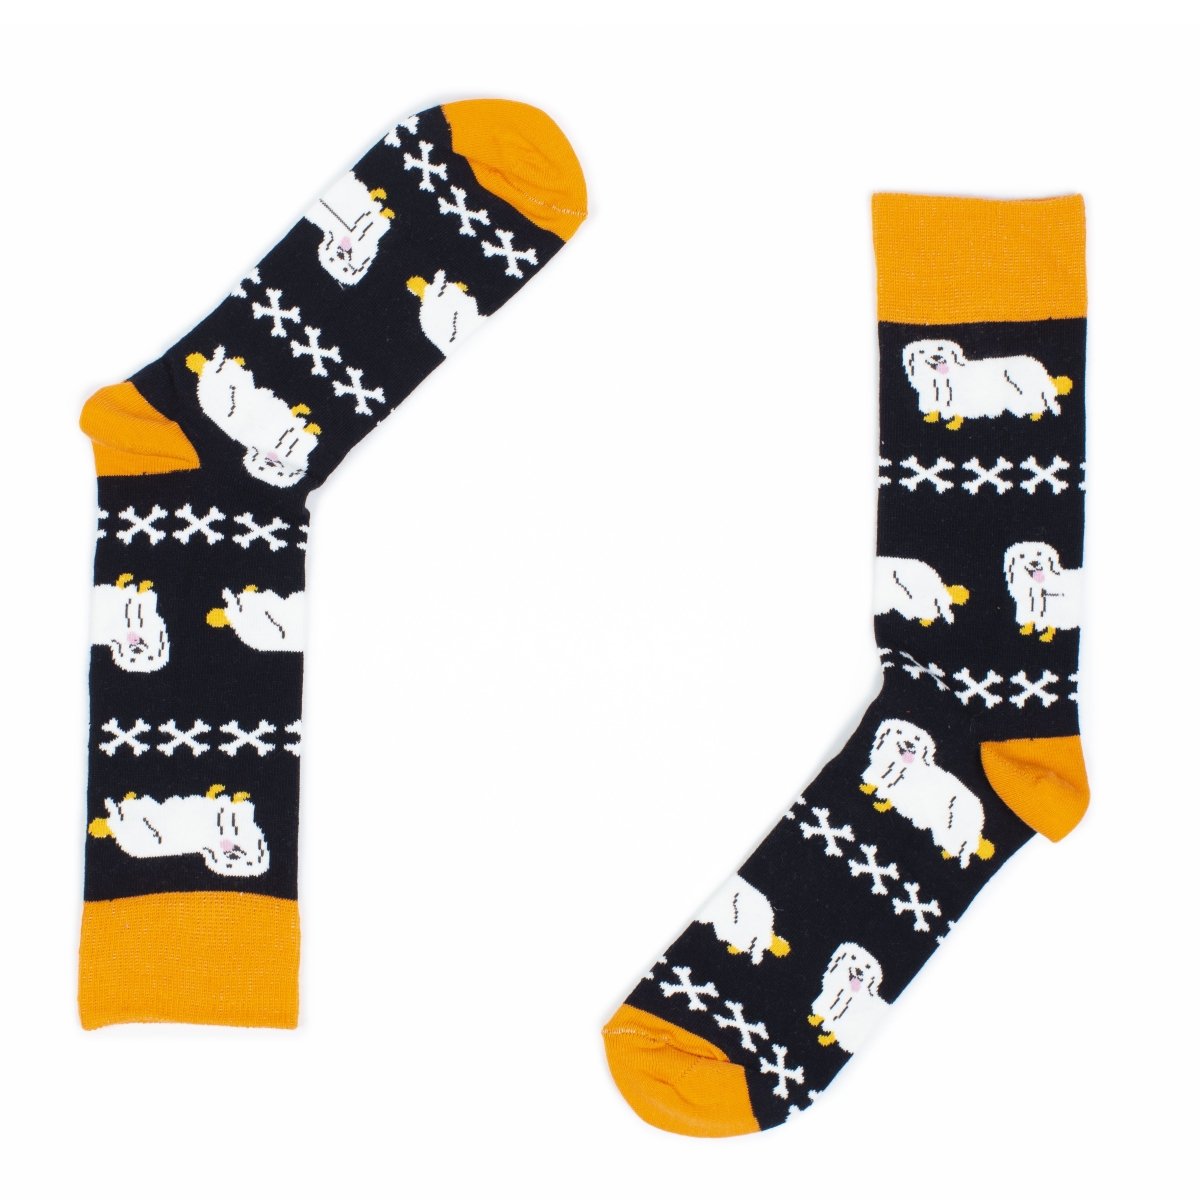 Halloween Golden Retriever Socks - Holiday Collection - SOCK DOGGO